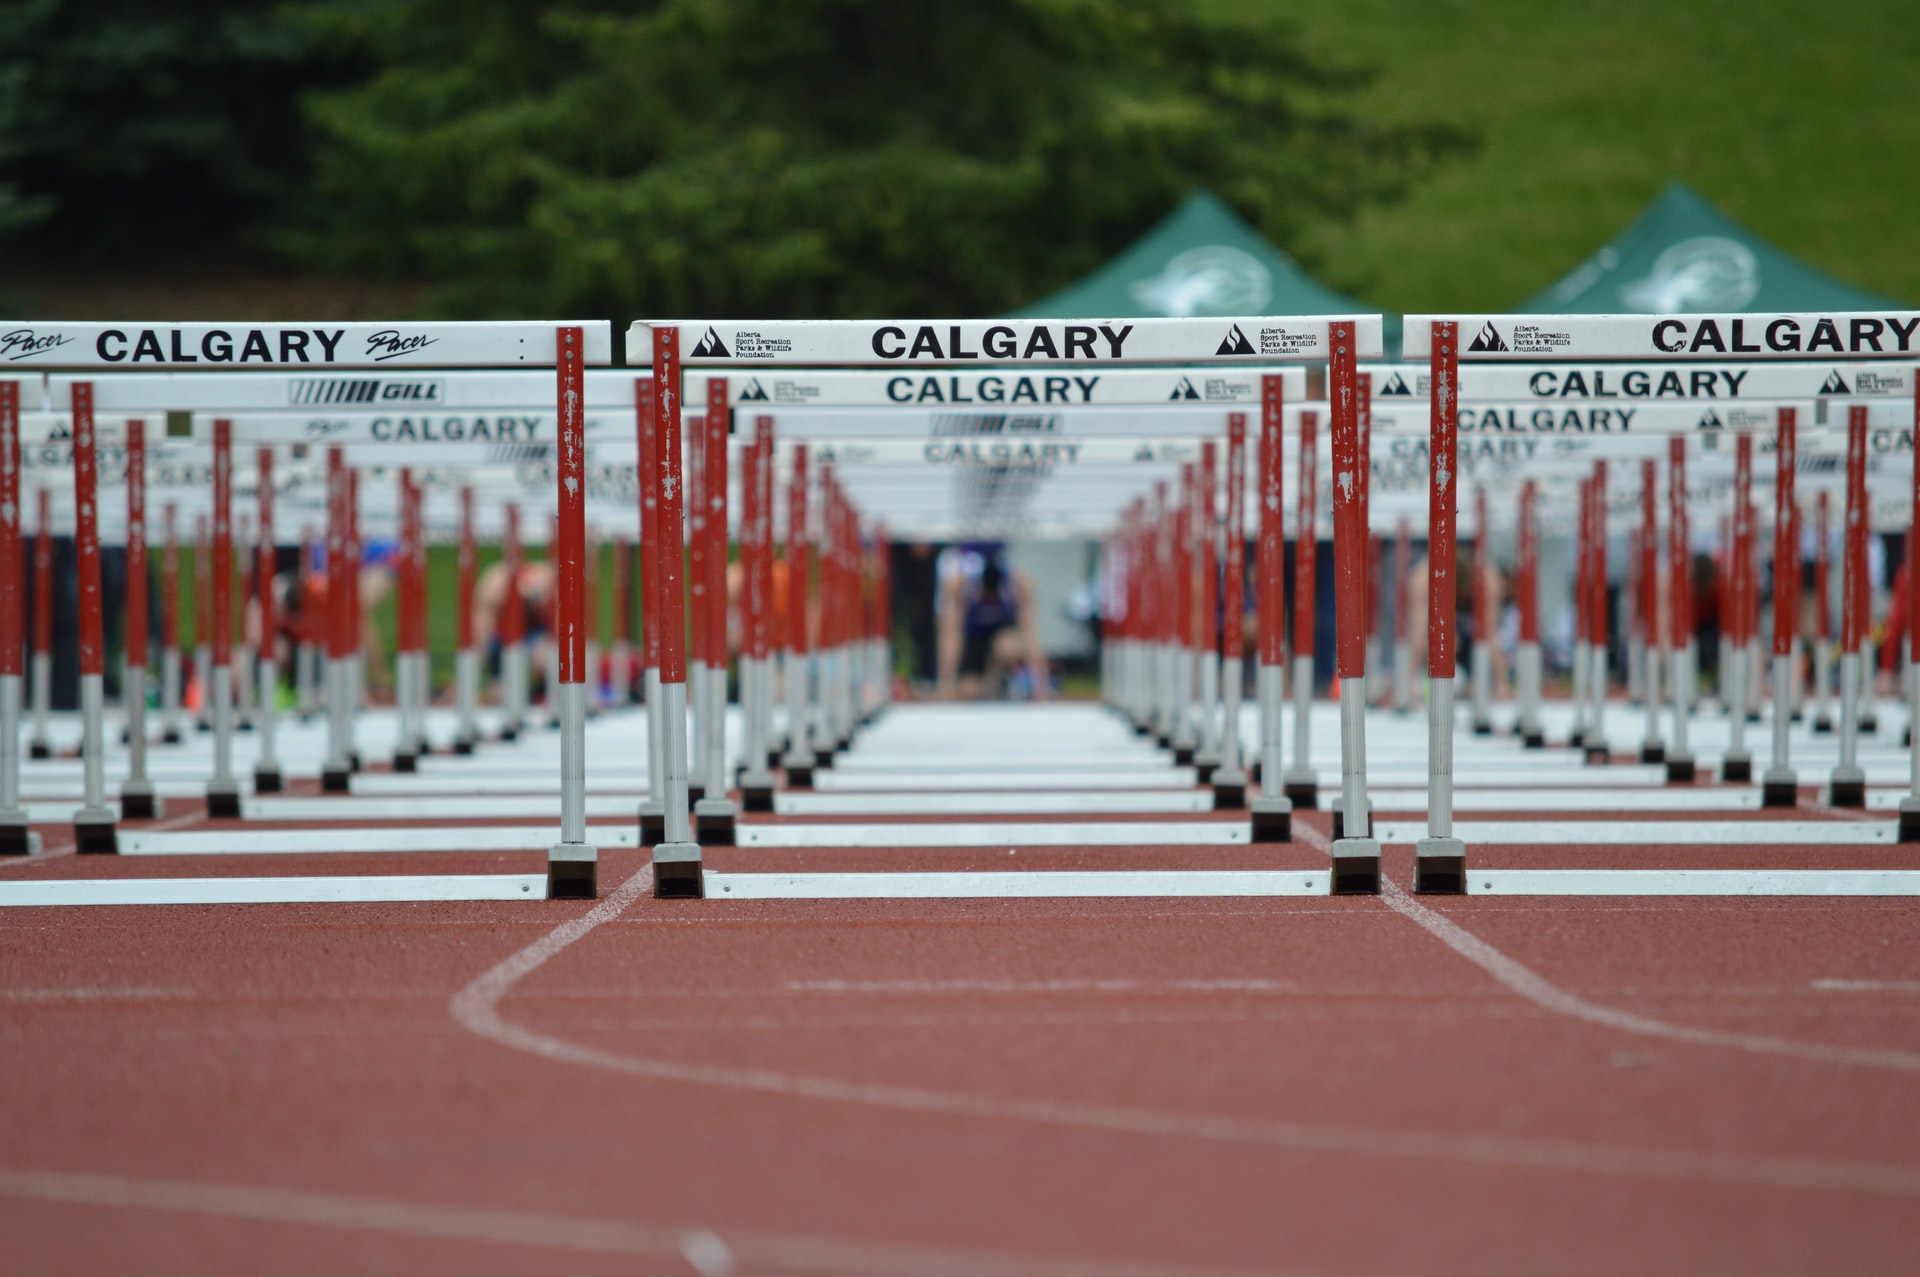 Image of hurdles by Josh Boak on Unsplash